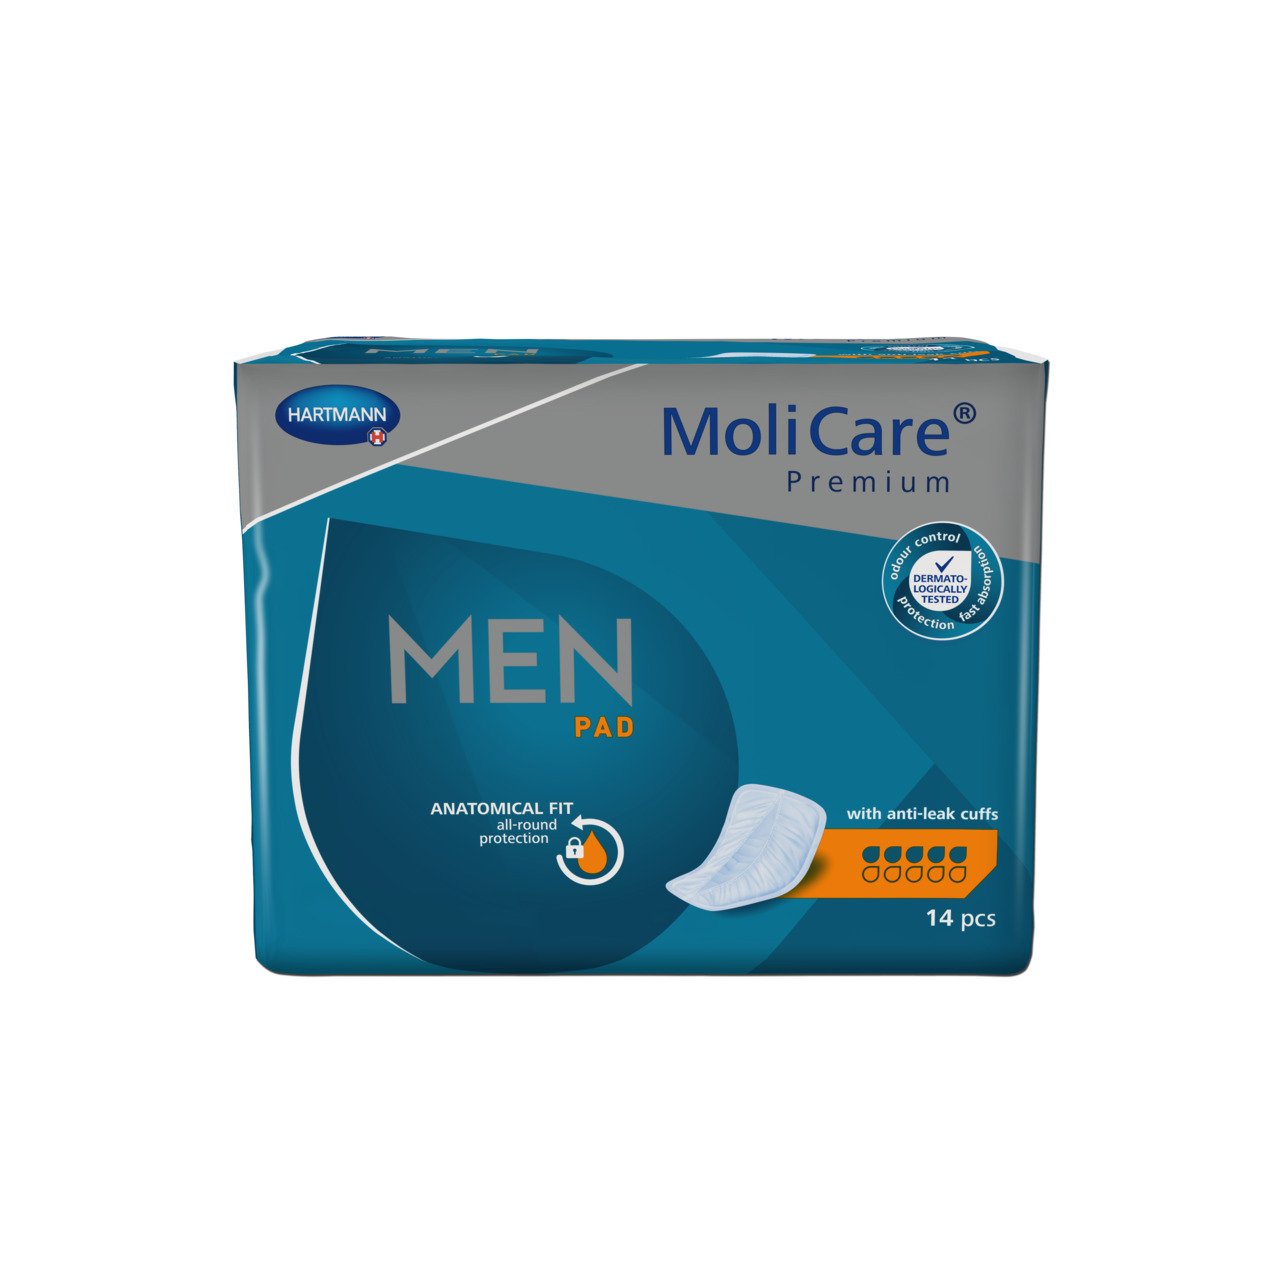 MoliCare Premium Men Pad 5 drops 168